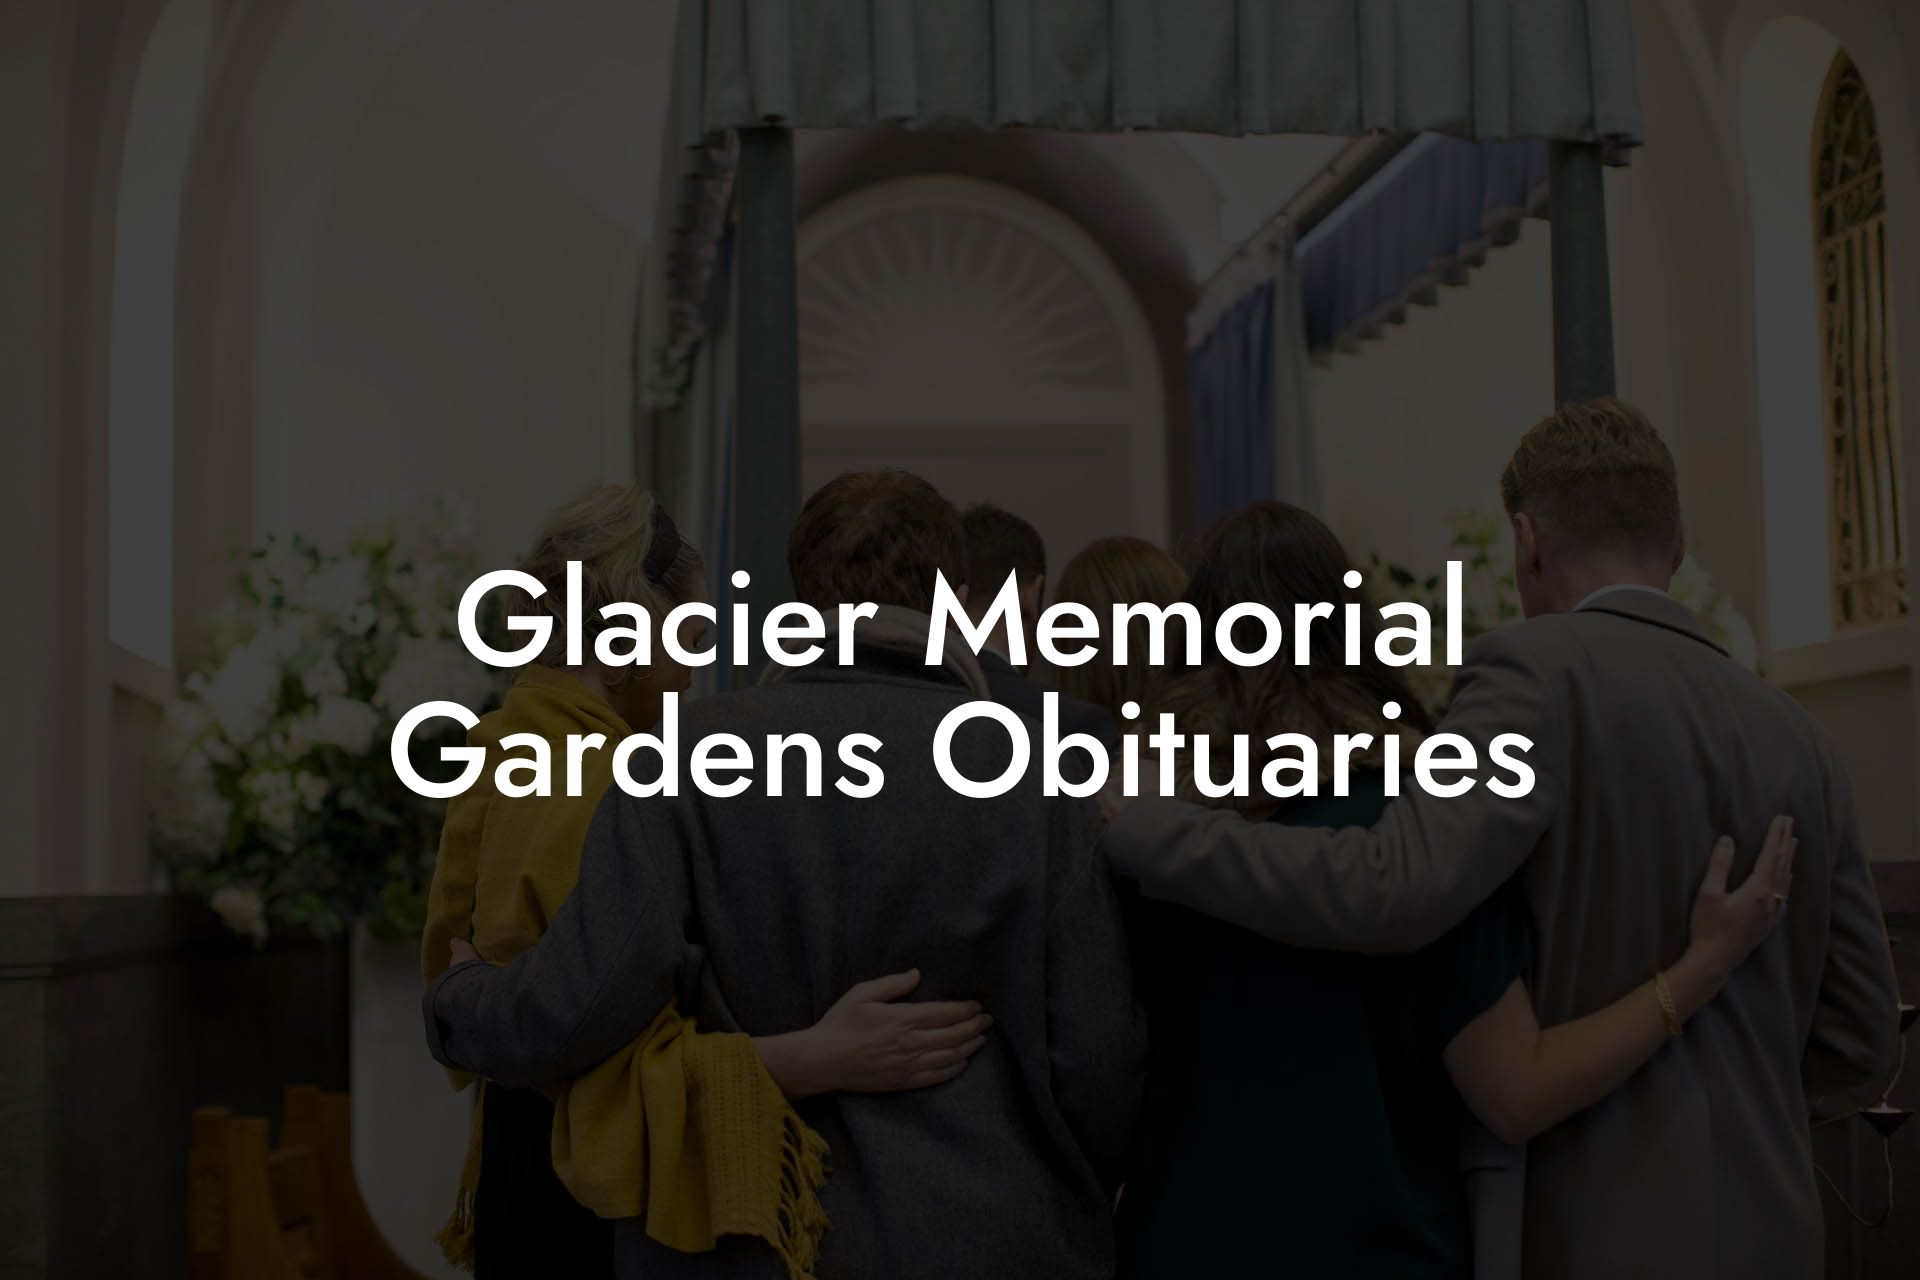 Glacier Memorial Gardens Obituaries